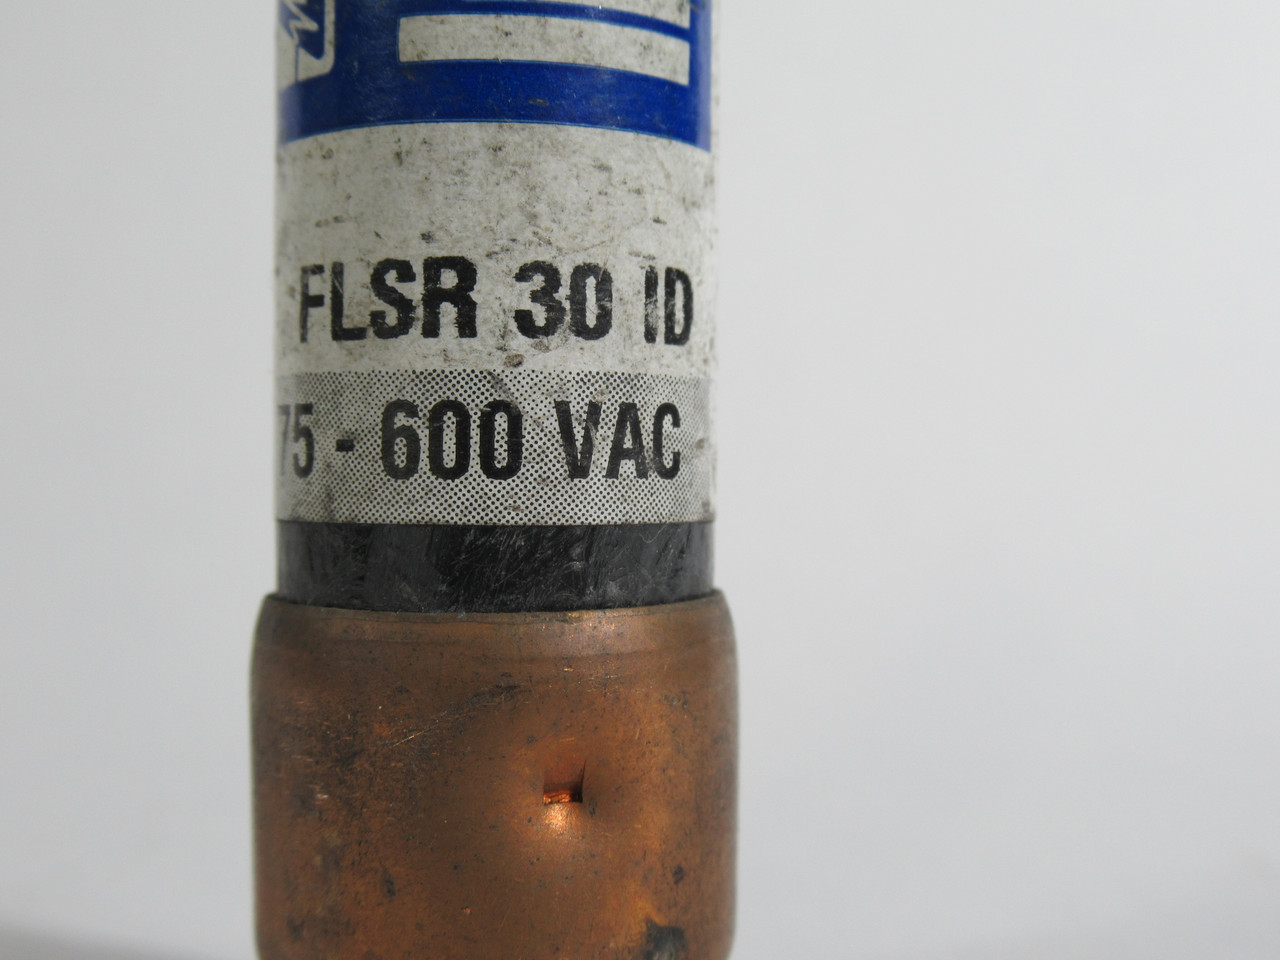 Littelfuse FLSR-30-ID Time Delay Fuse 30A 600V USED